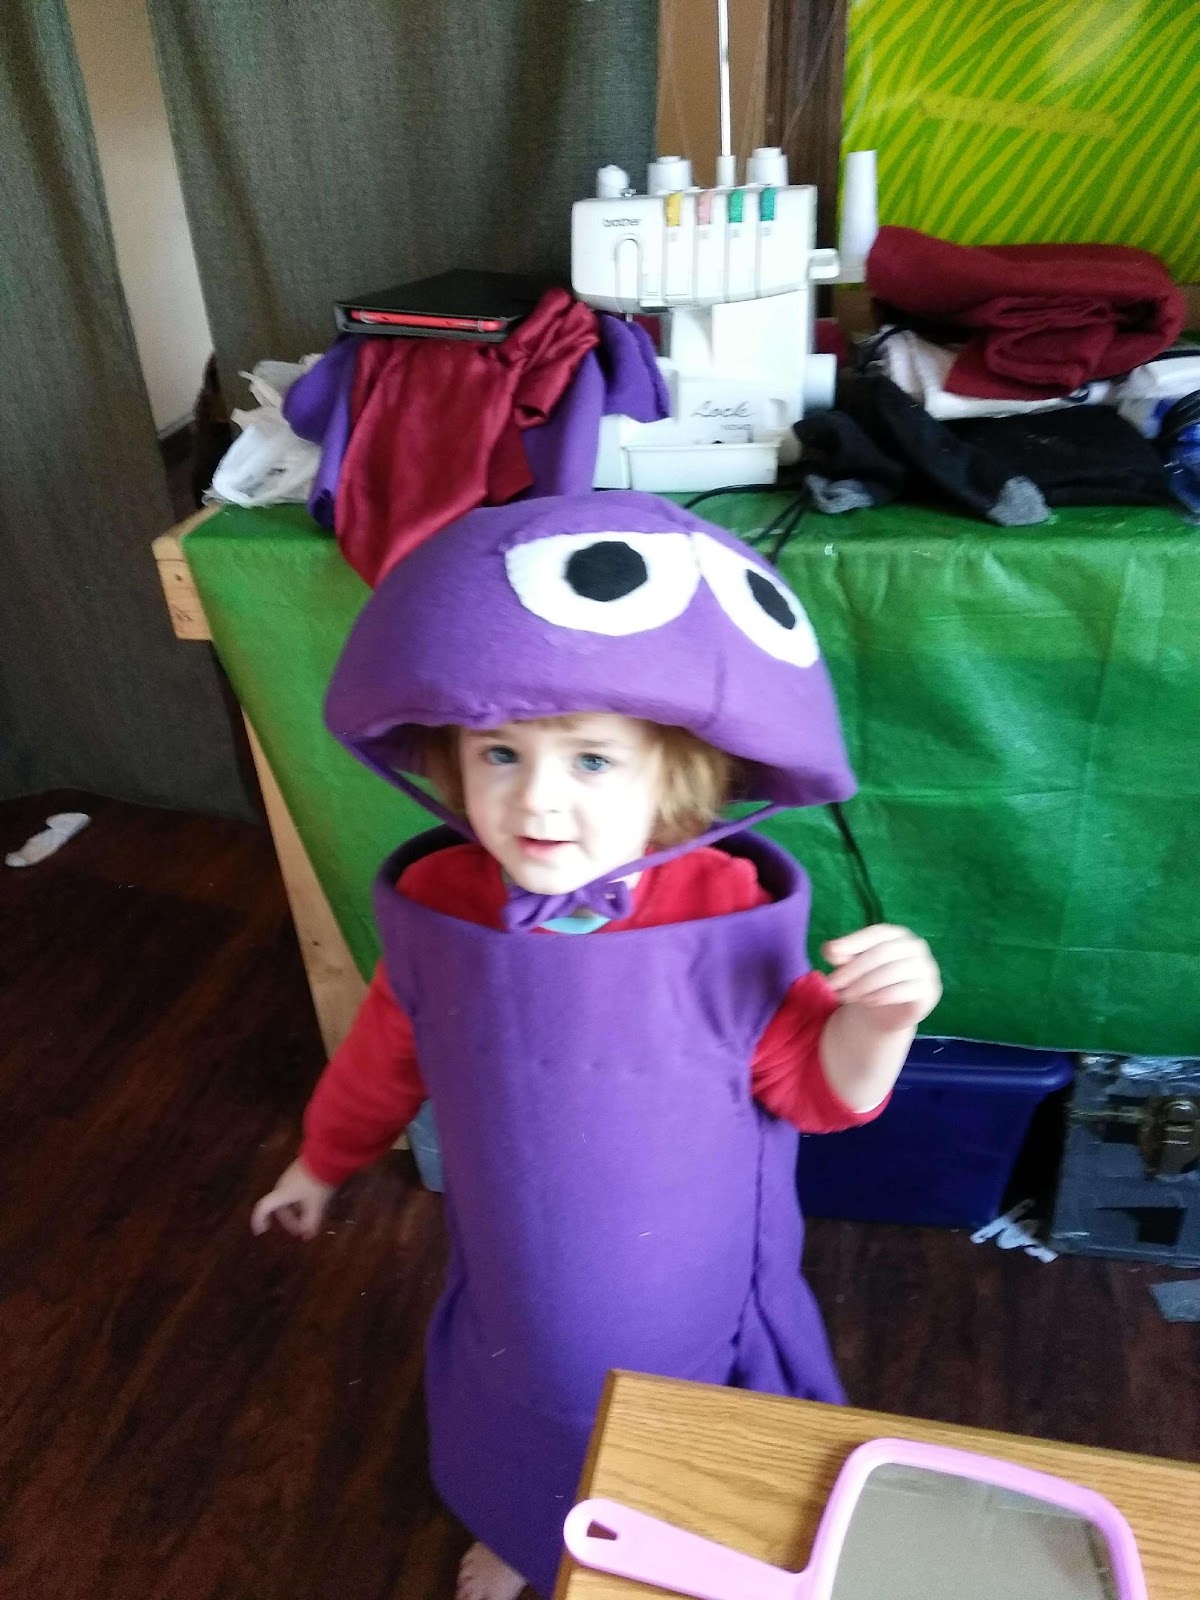 A child in a purple garment

Description automatically generated